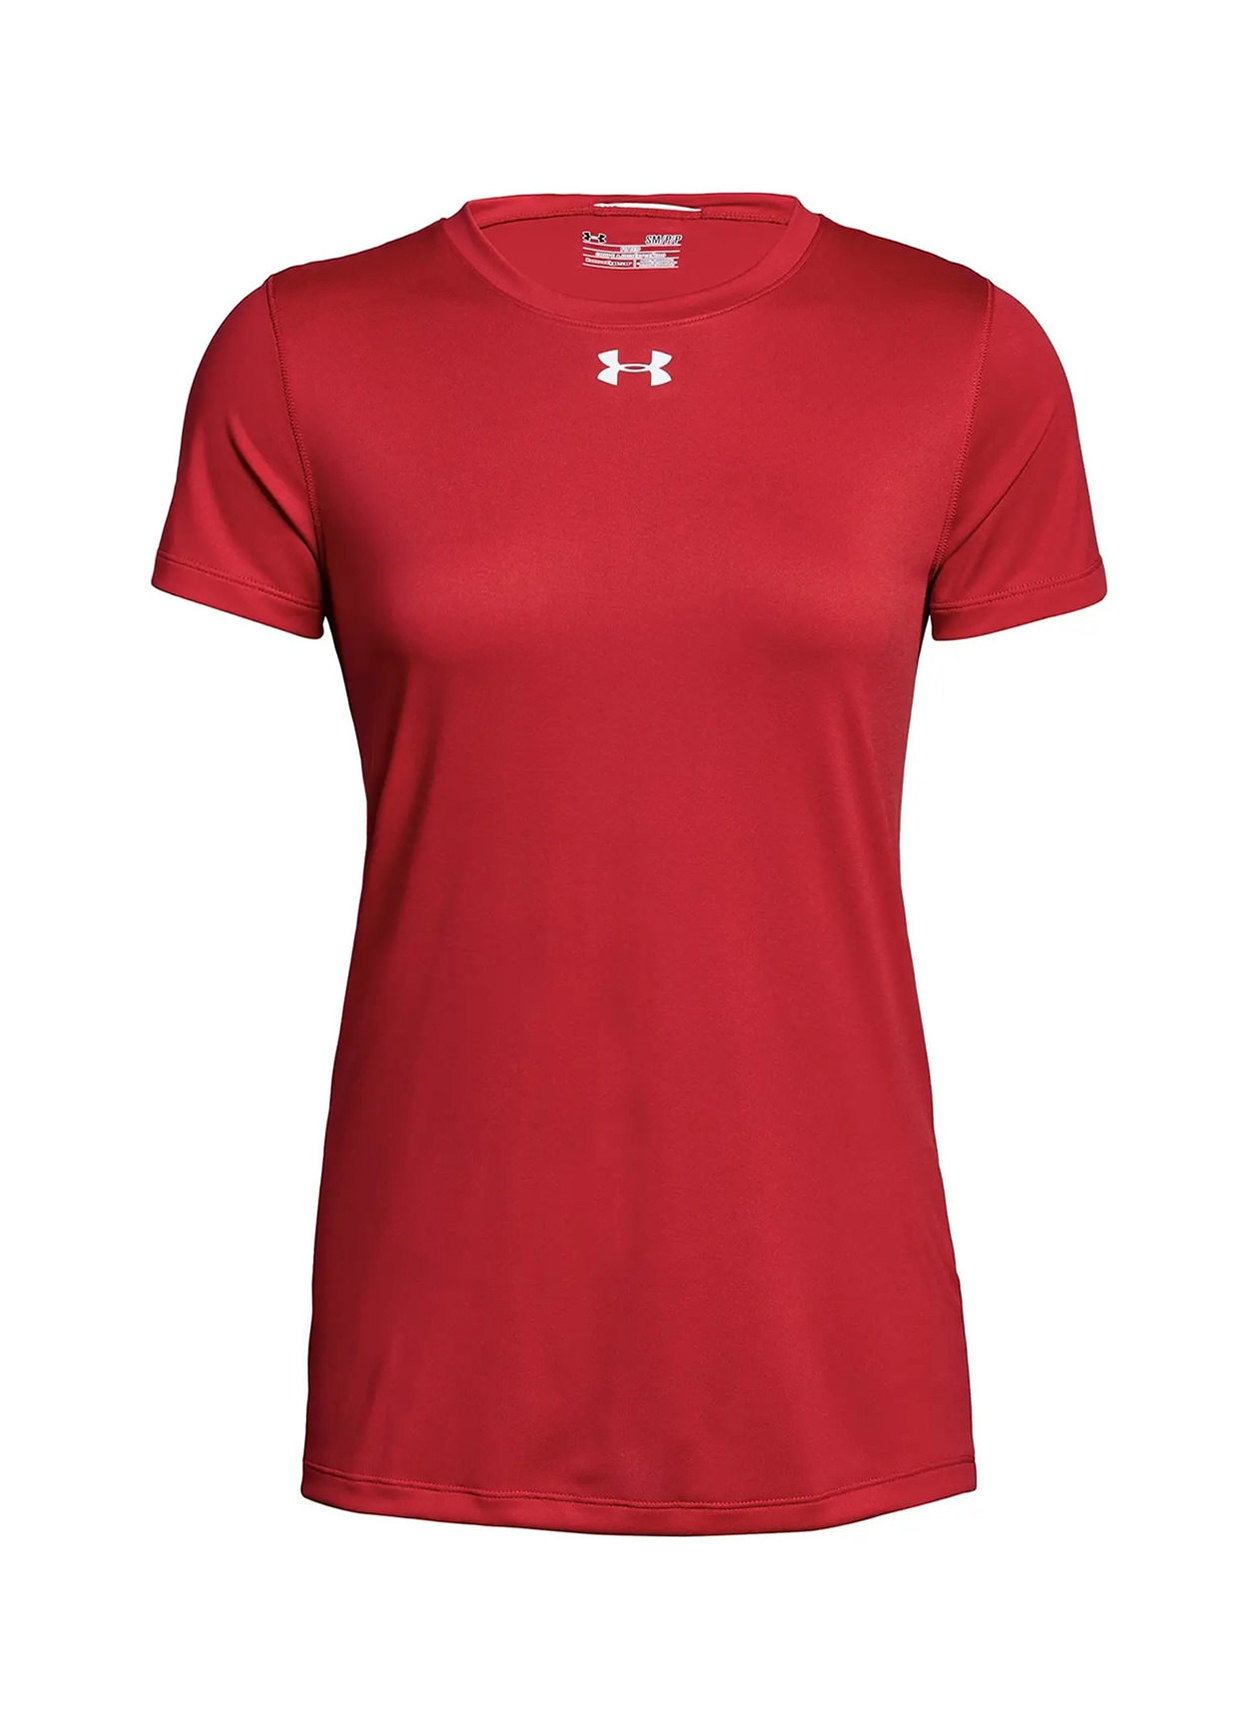 Under Armour Women's Red / Metallic Silver Locker 2.0 T-Shirt